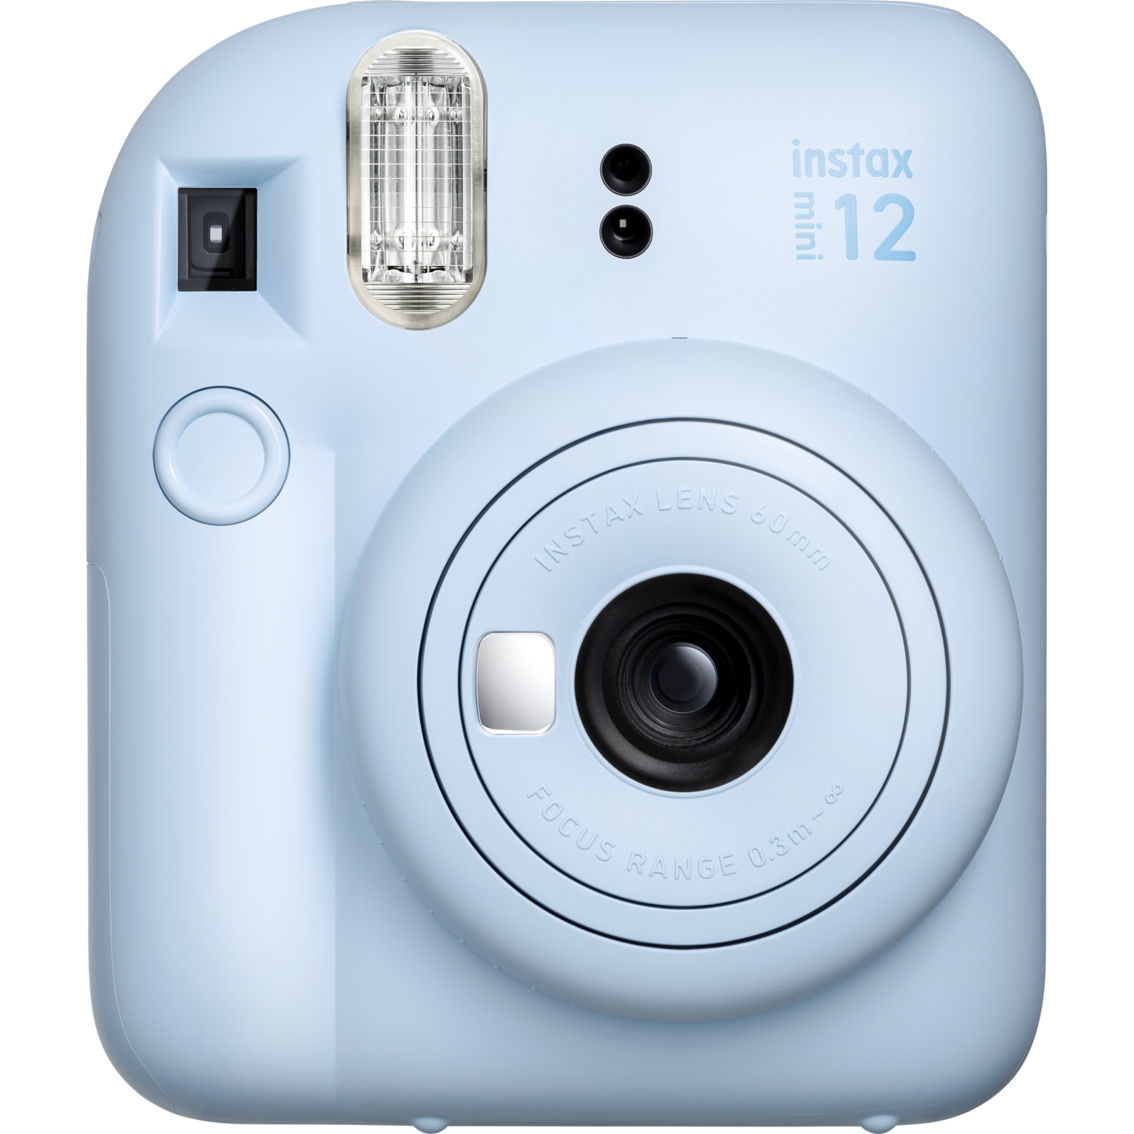 Fujifilm Instax Mini 12 Camera, Pastel Blue - Image 1 of 2